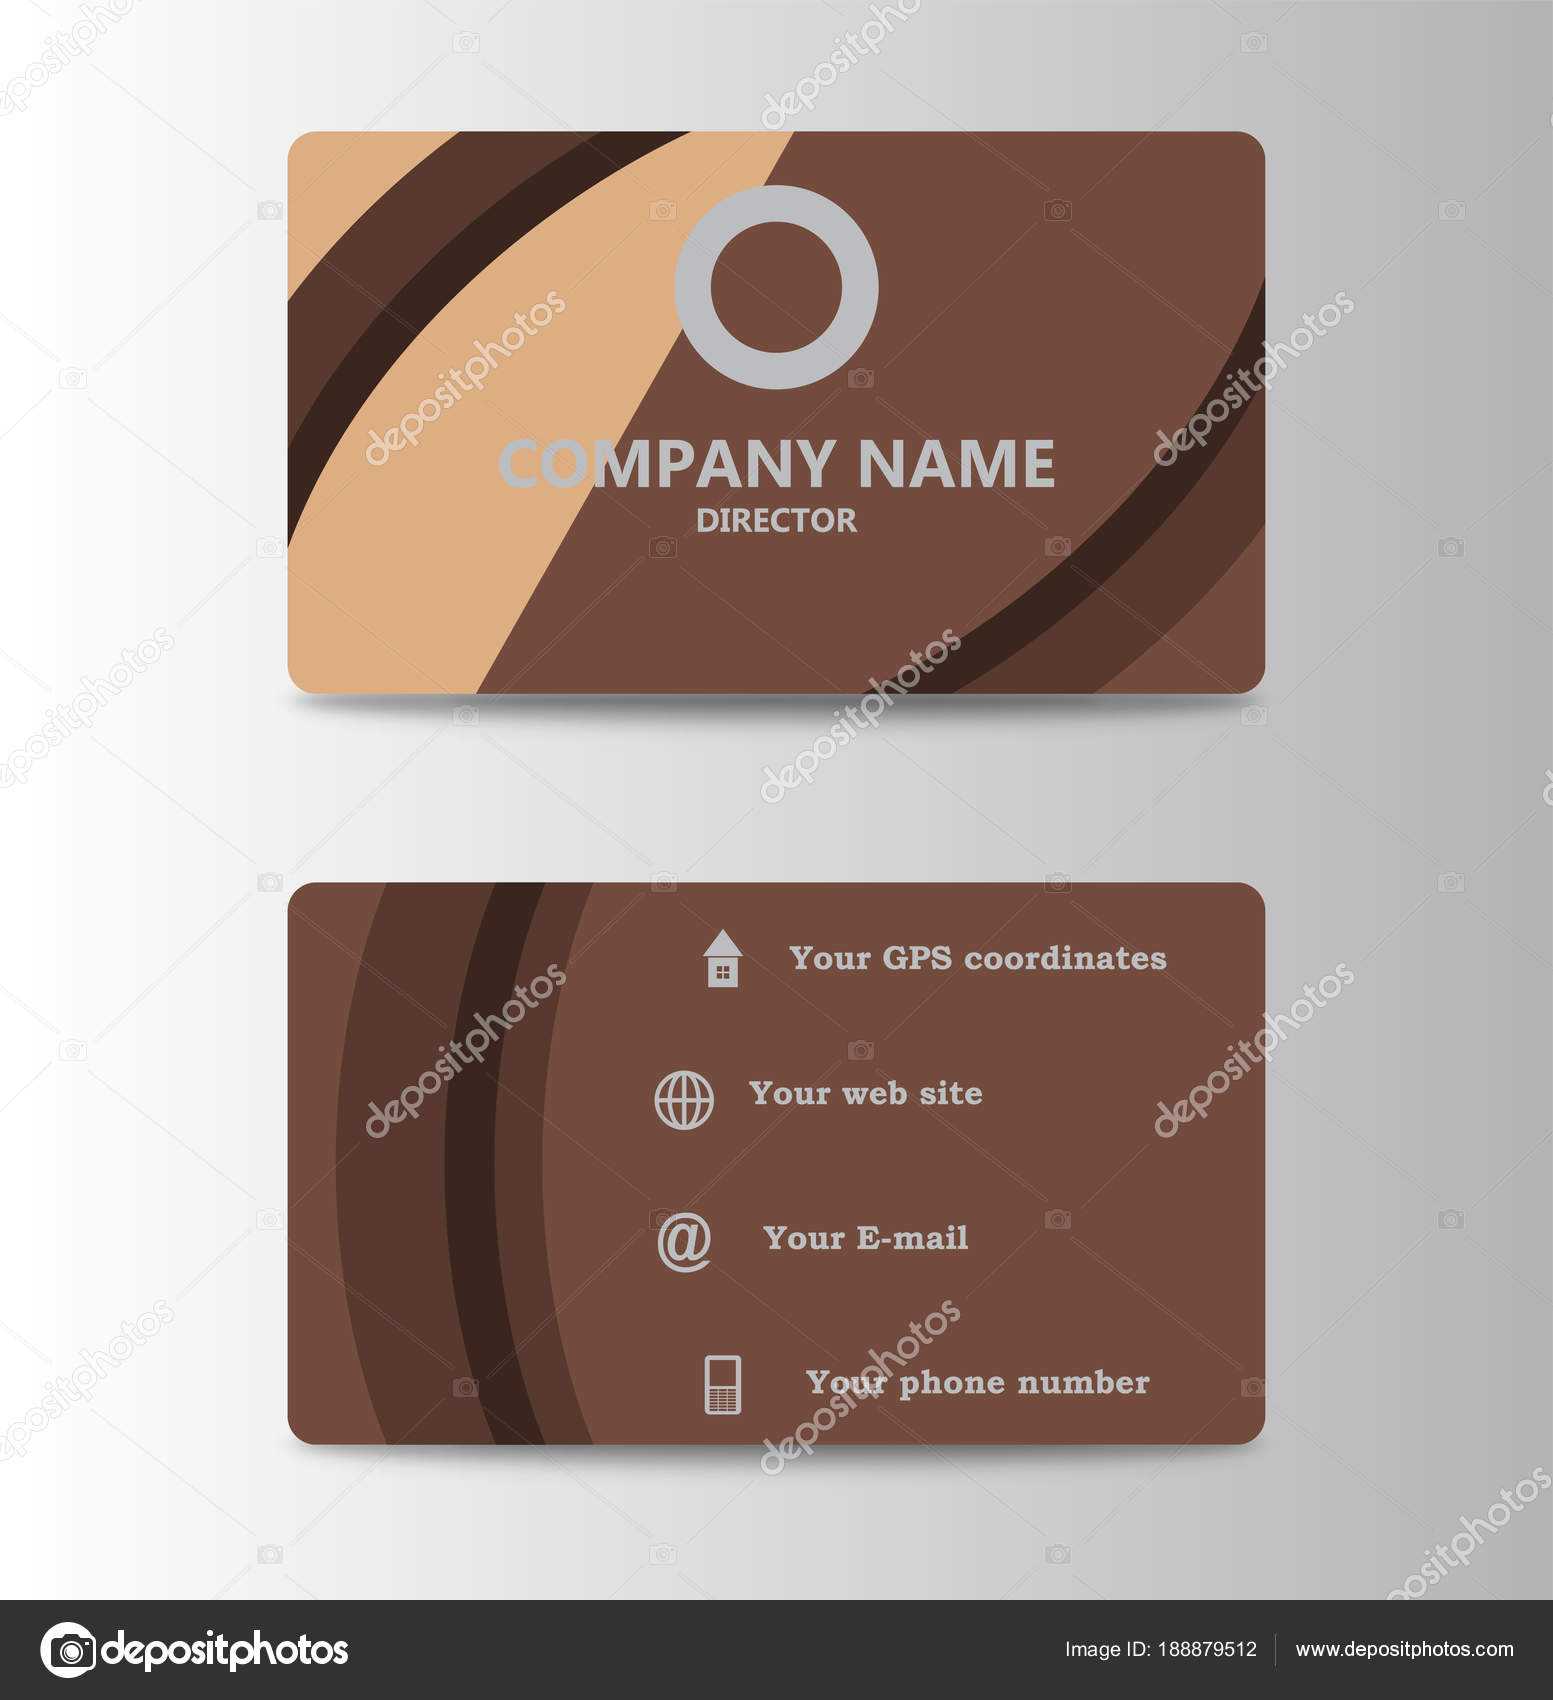 Corporate Id Card Design Template. Personal Id Card For Inside Personal Identification Card Template